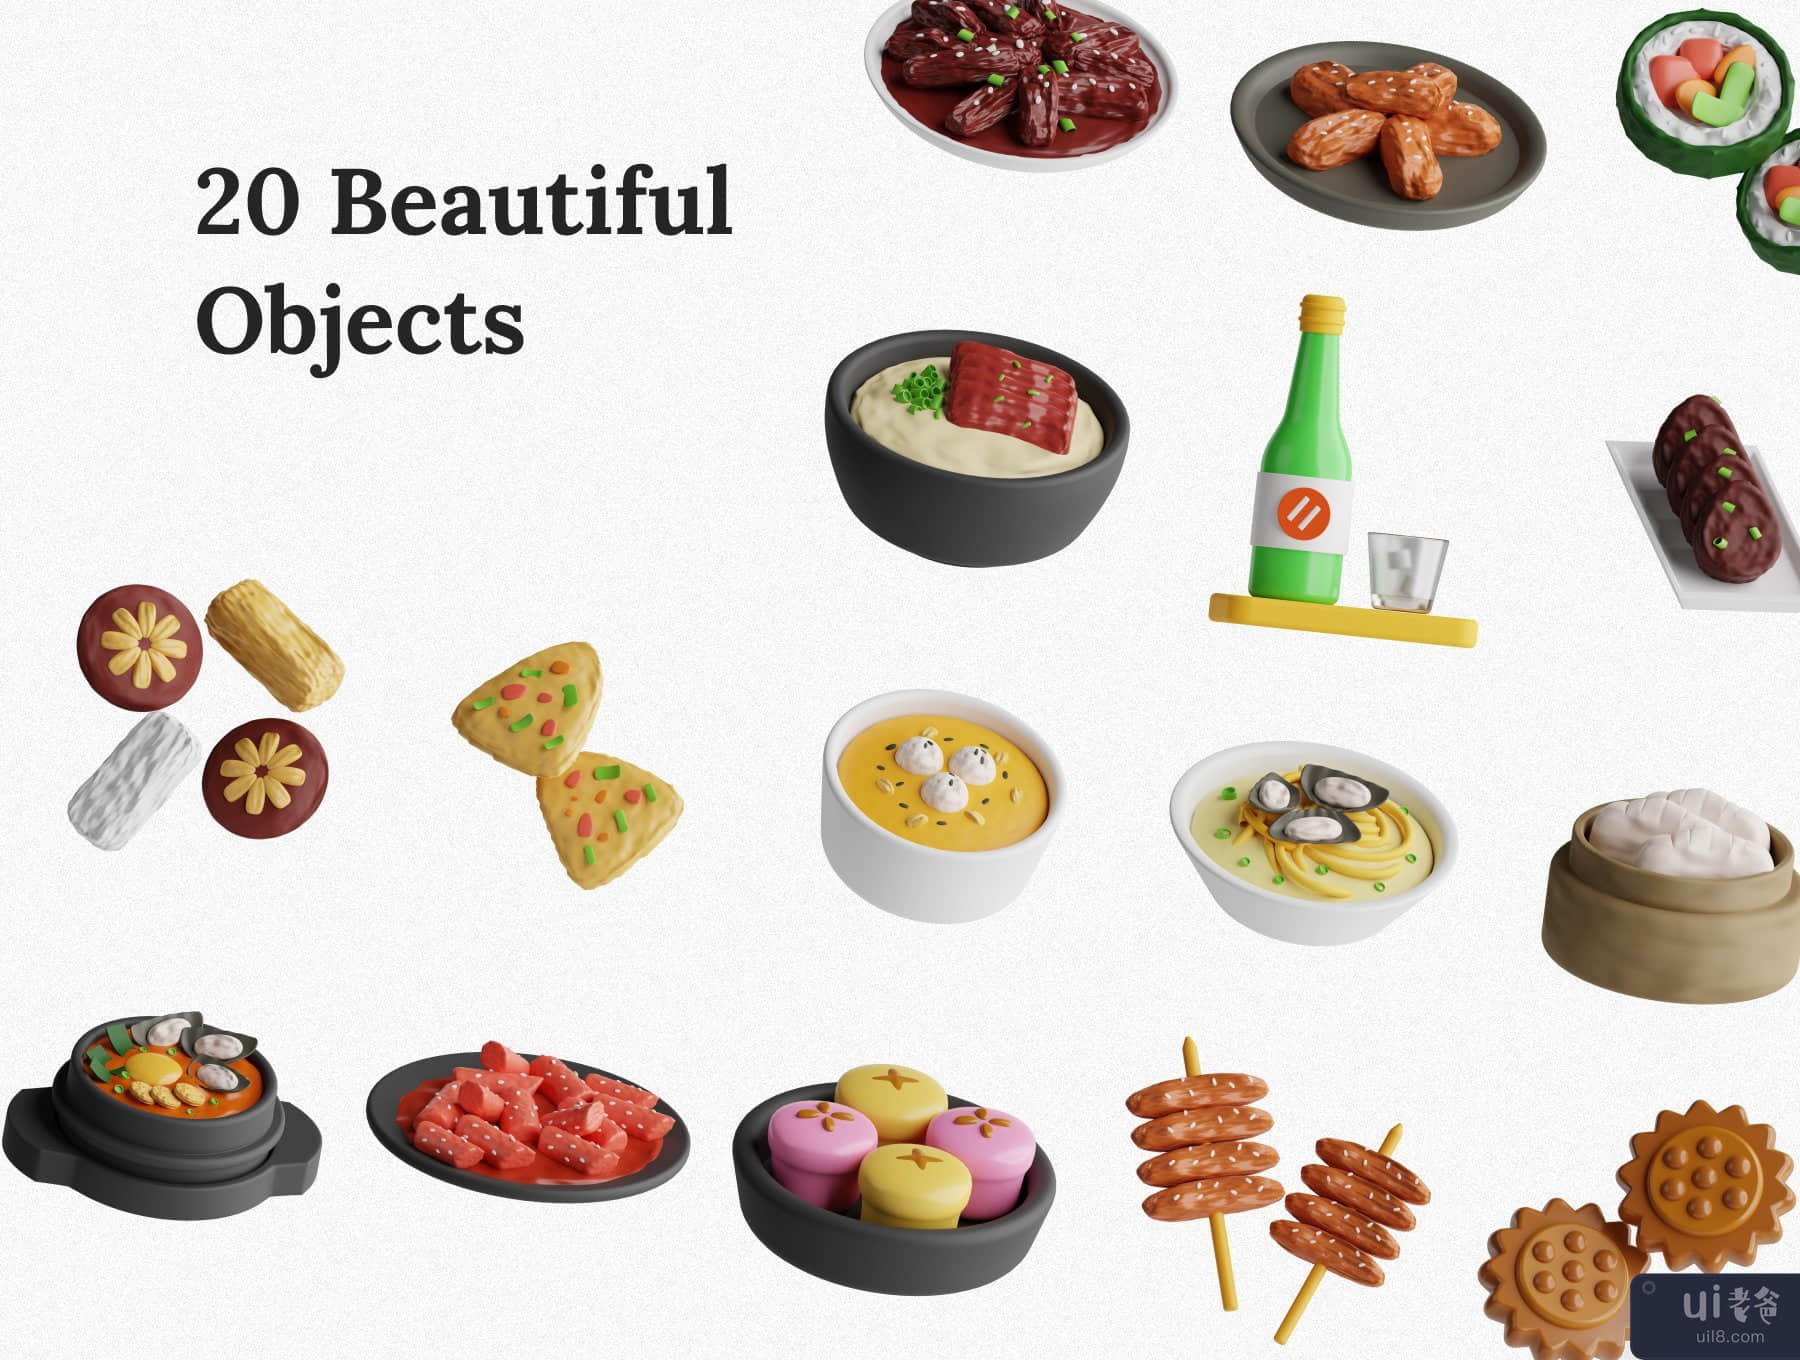 韩国食品 3D 图标集 (Korean Food 3D Icon Set)插图2